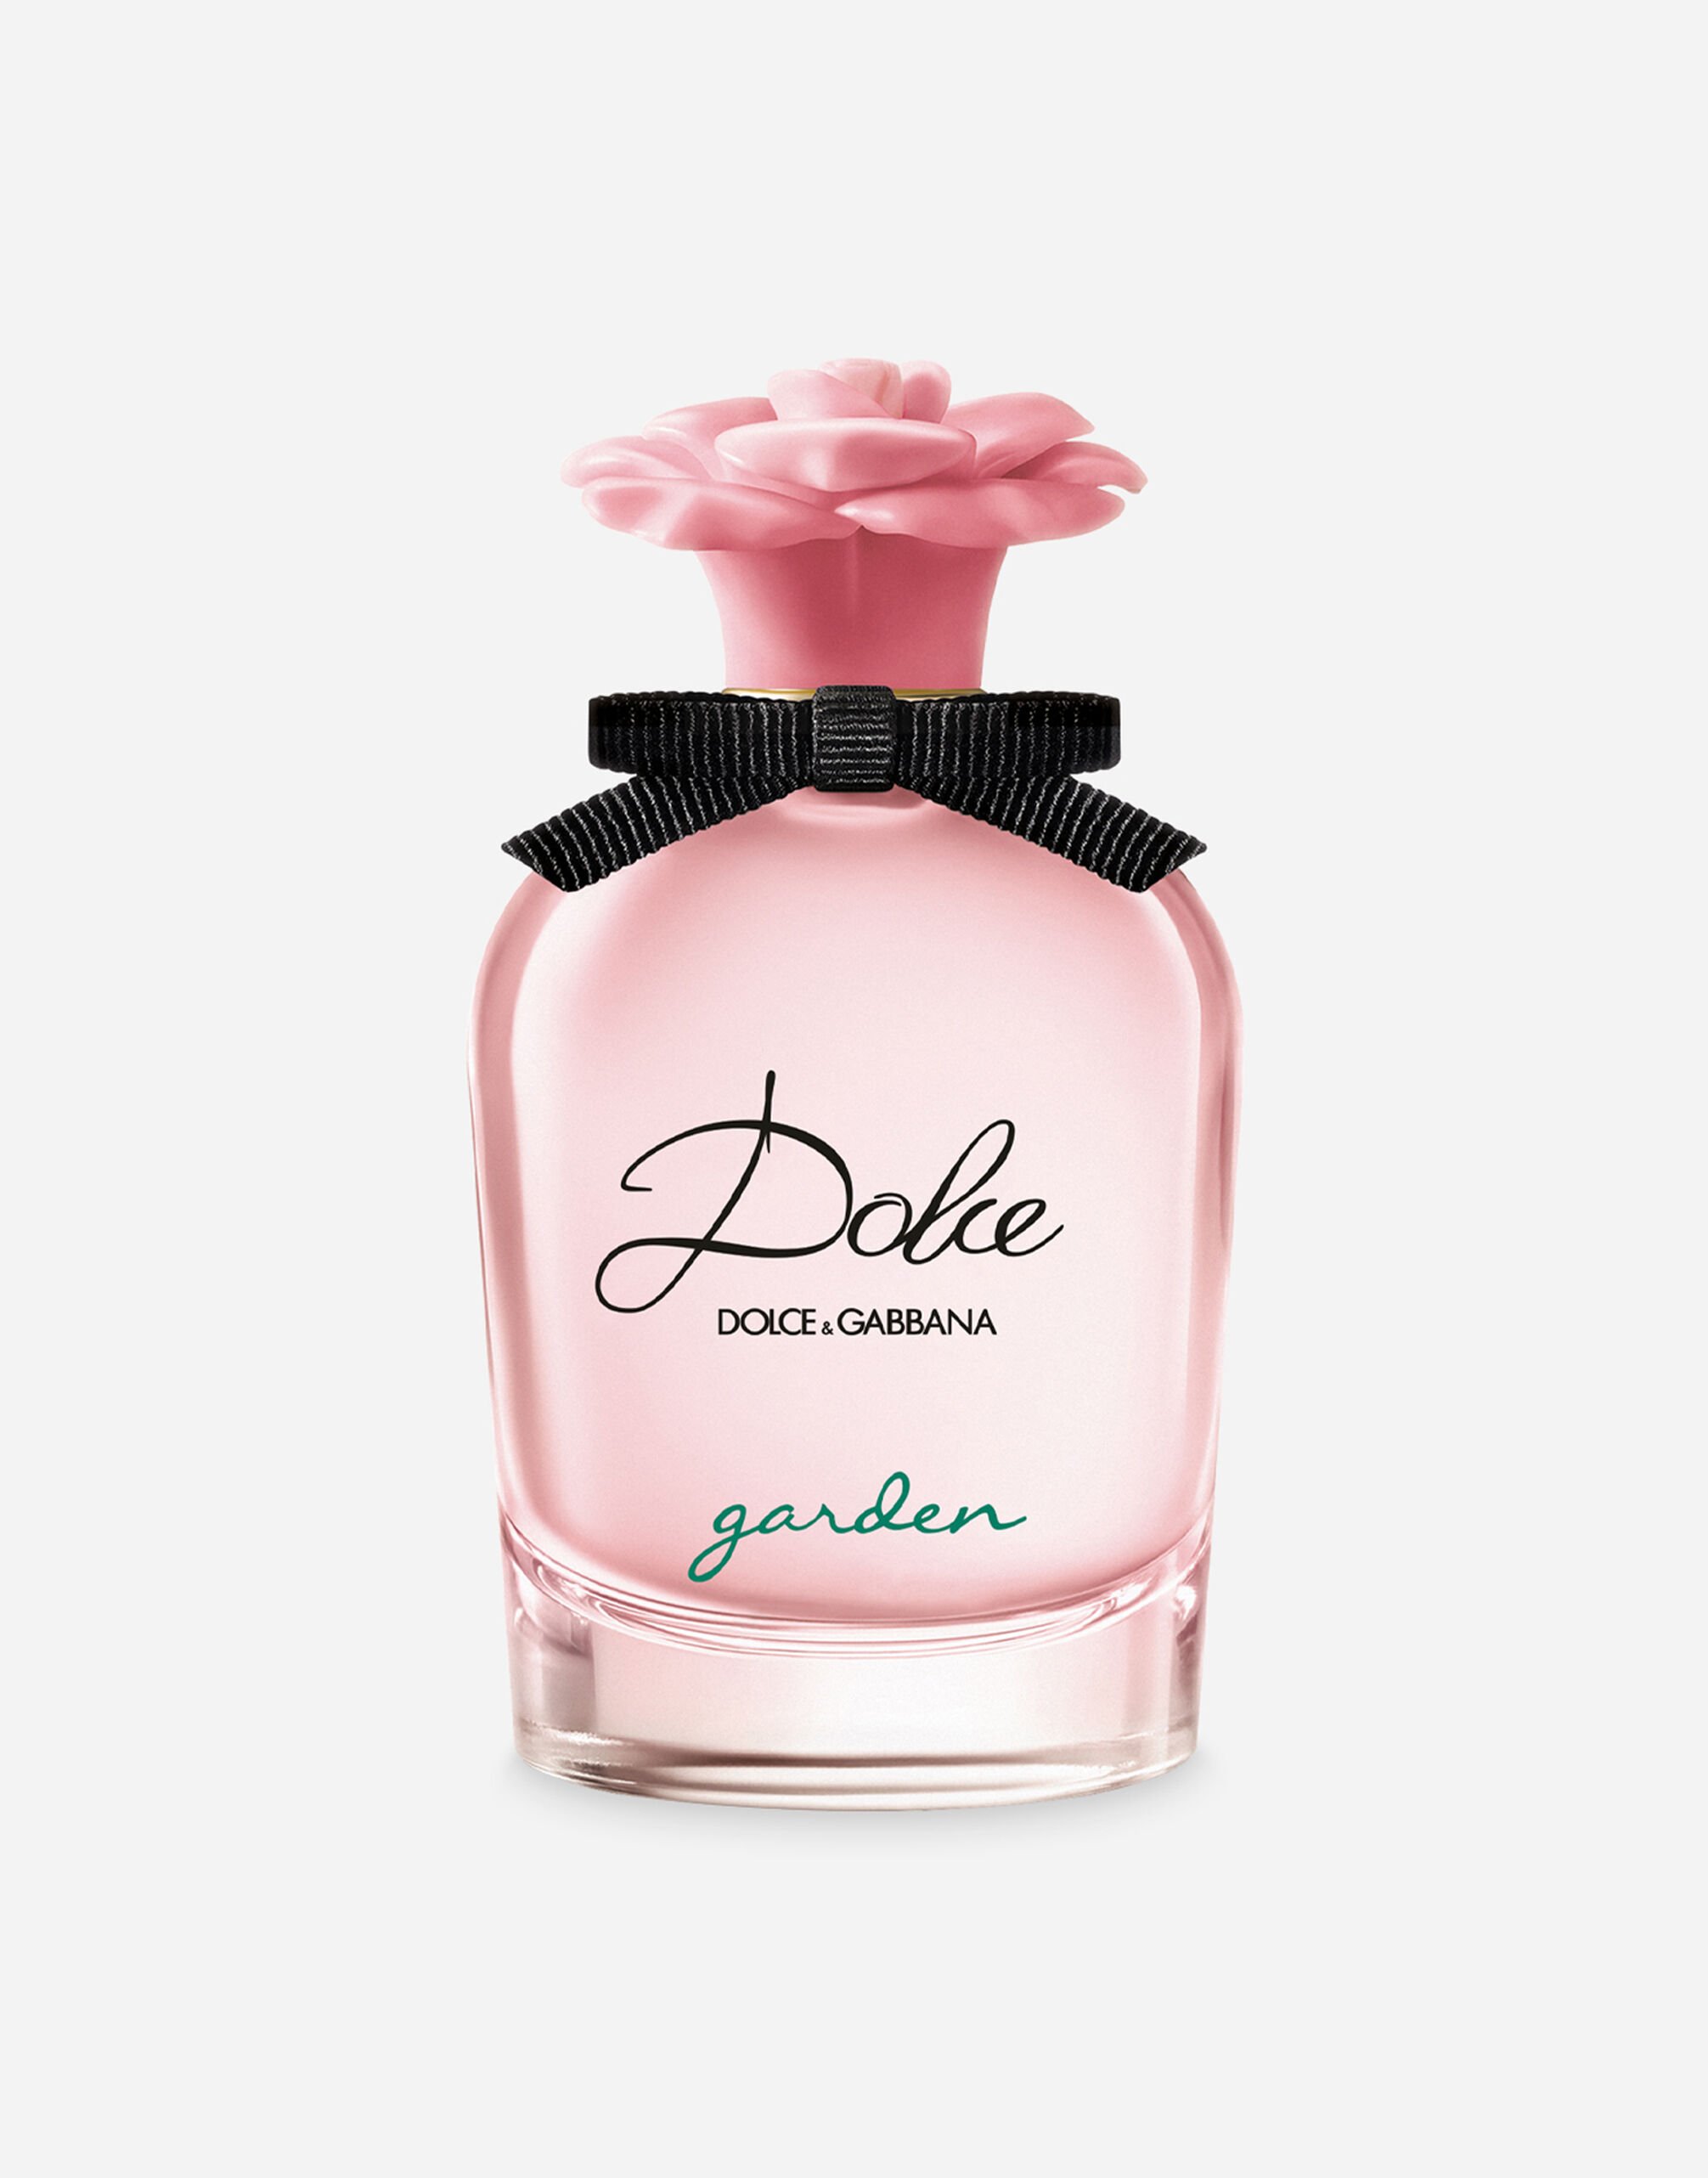 Dolce & Gabbana Dolce Garden Eau de Parfum - VP000WVP000